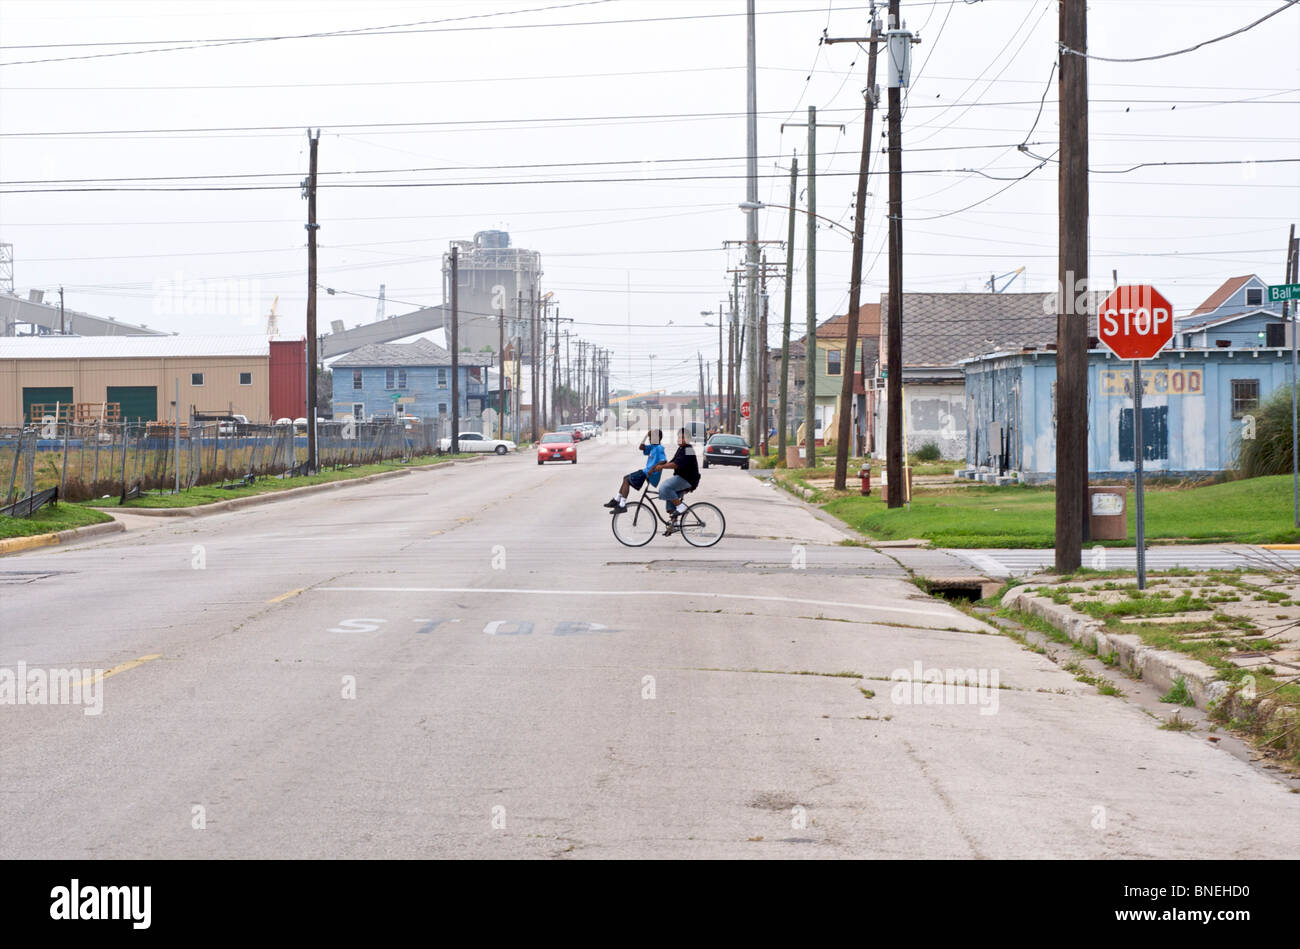 Children on bicycle crossing road near poor neighborhood in Galveston, Texas, USA Stock Photo